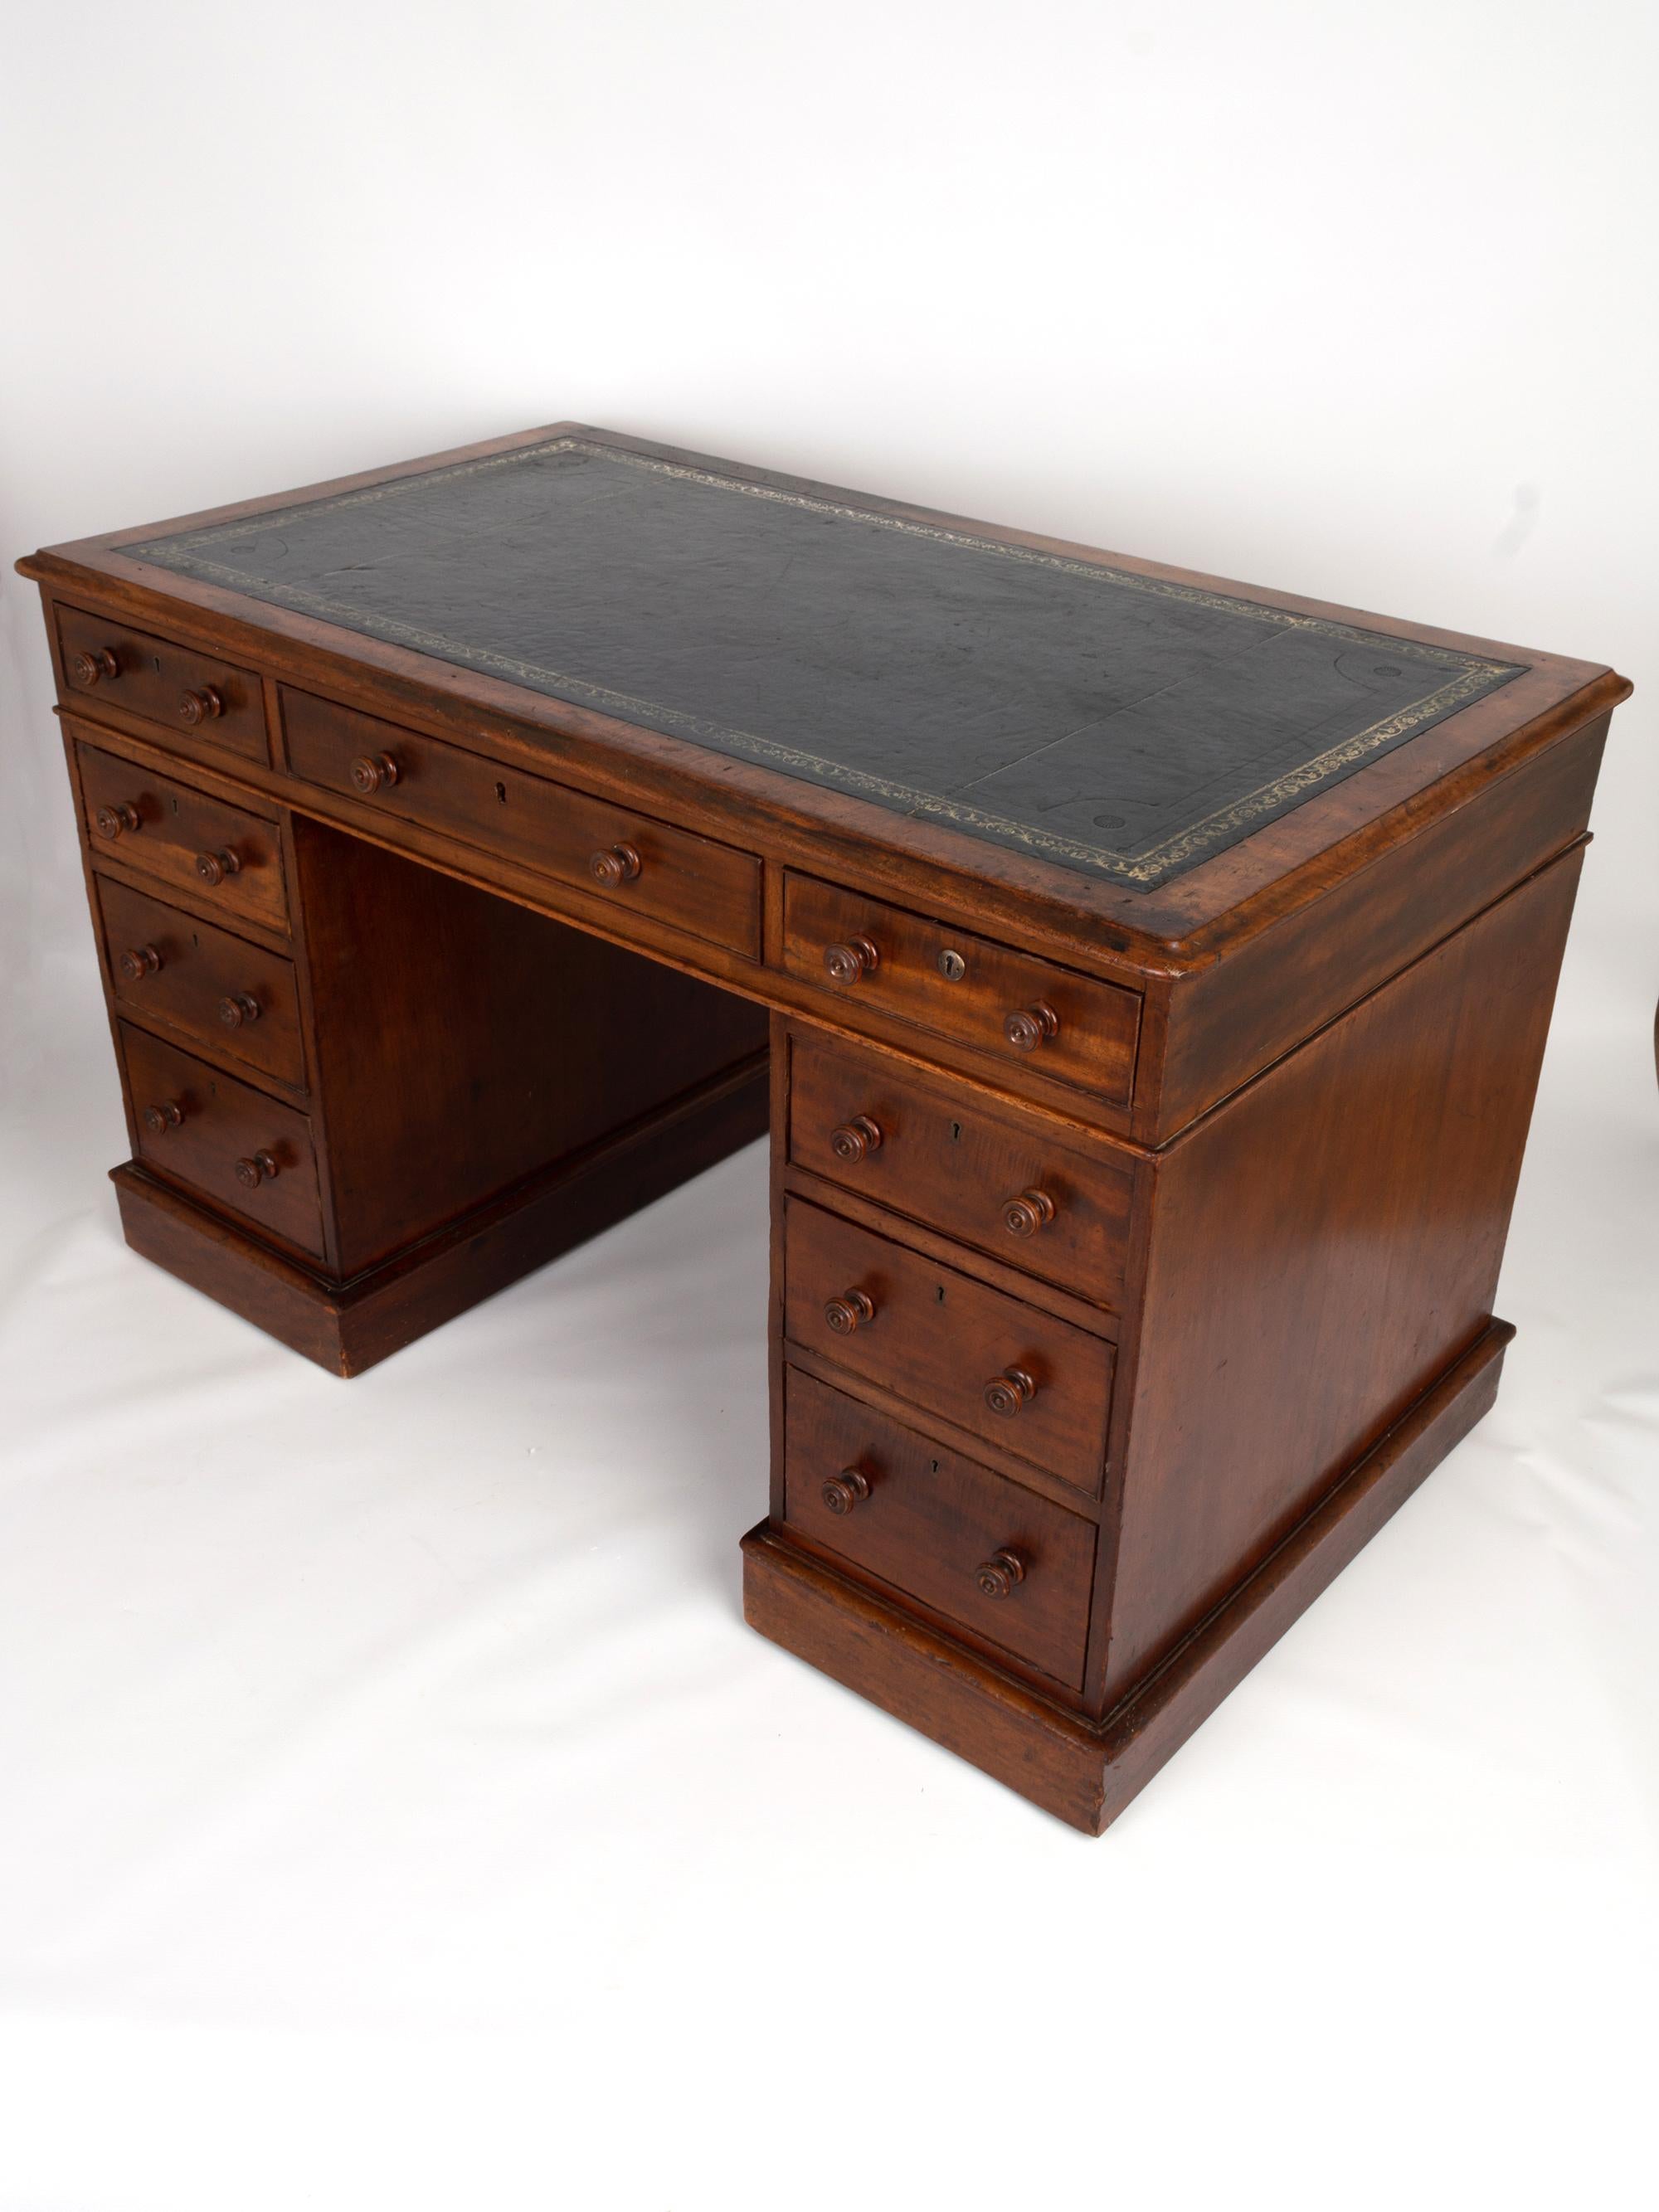 Hand-Crafted Antique English Victorian Pedestal Desk C.1850